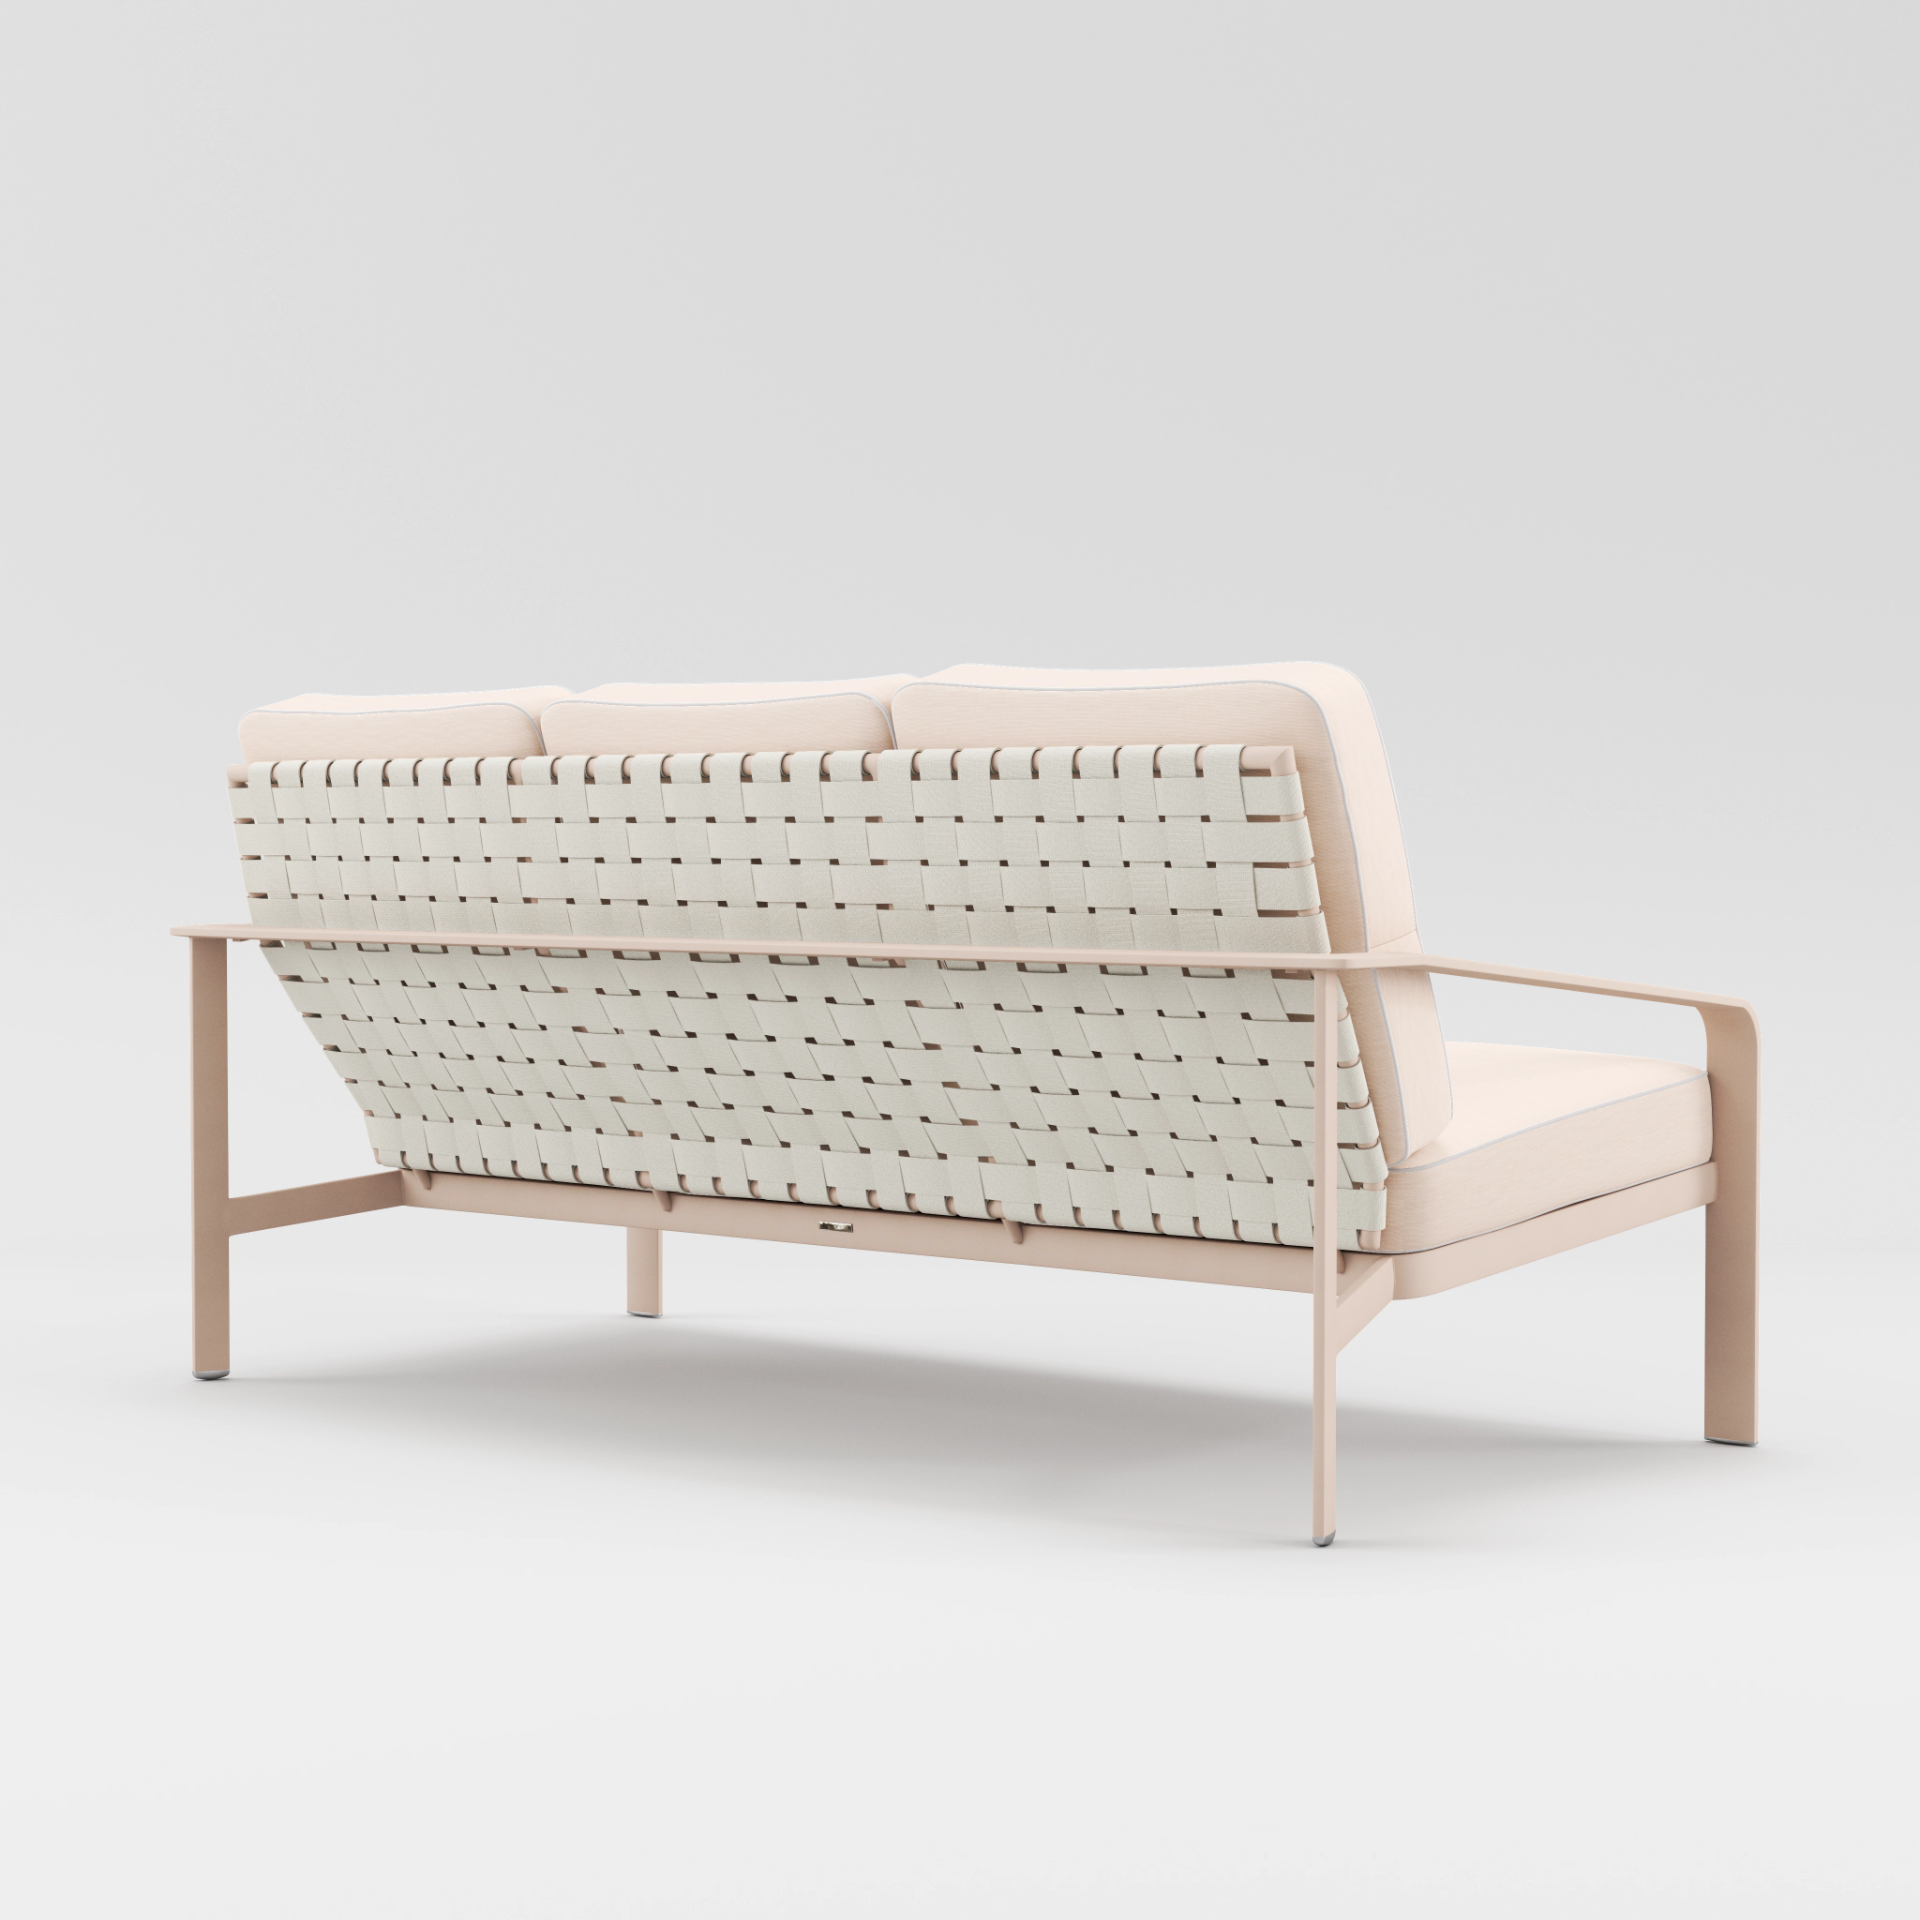 Softscape Cushion Sofa by Brown Jordan